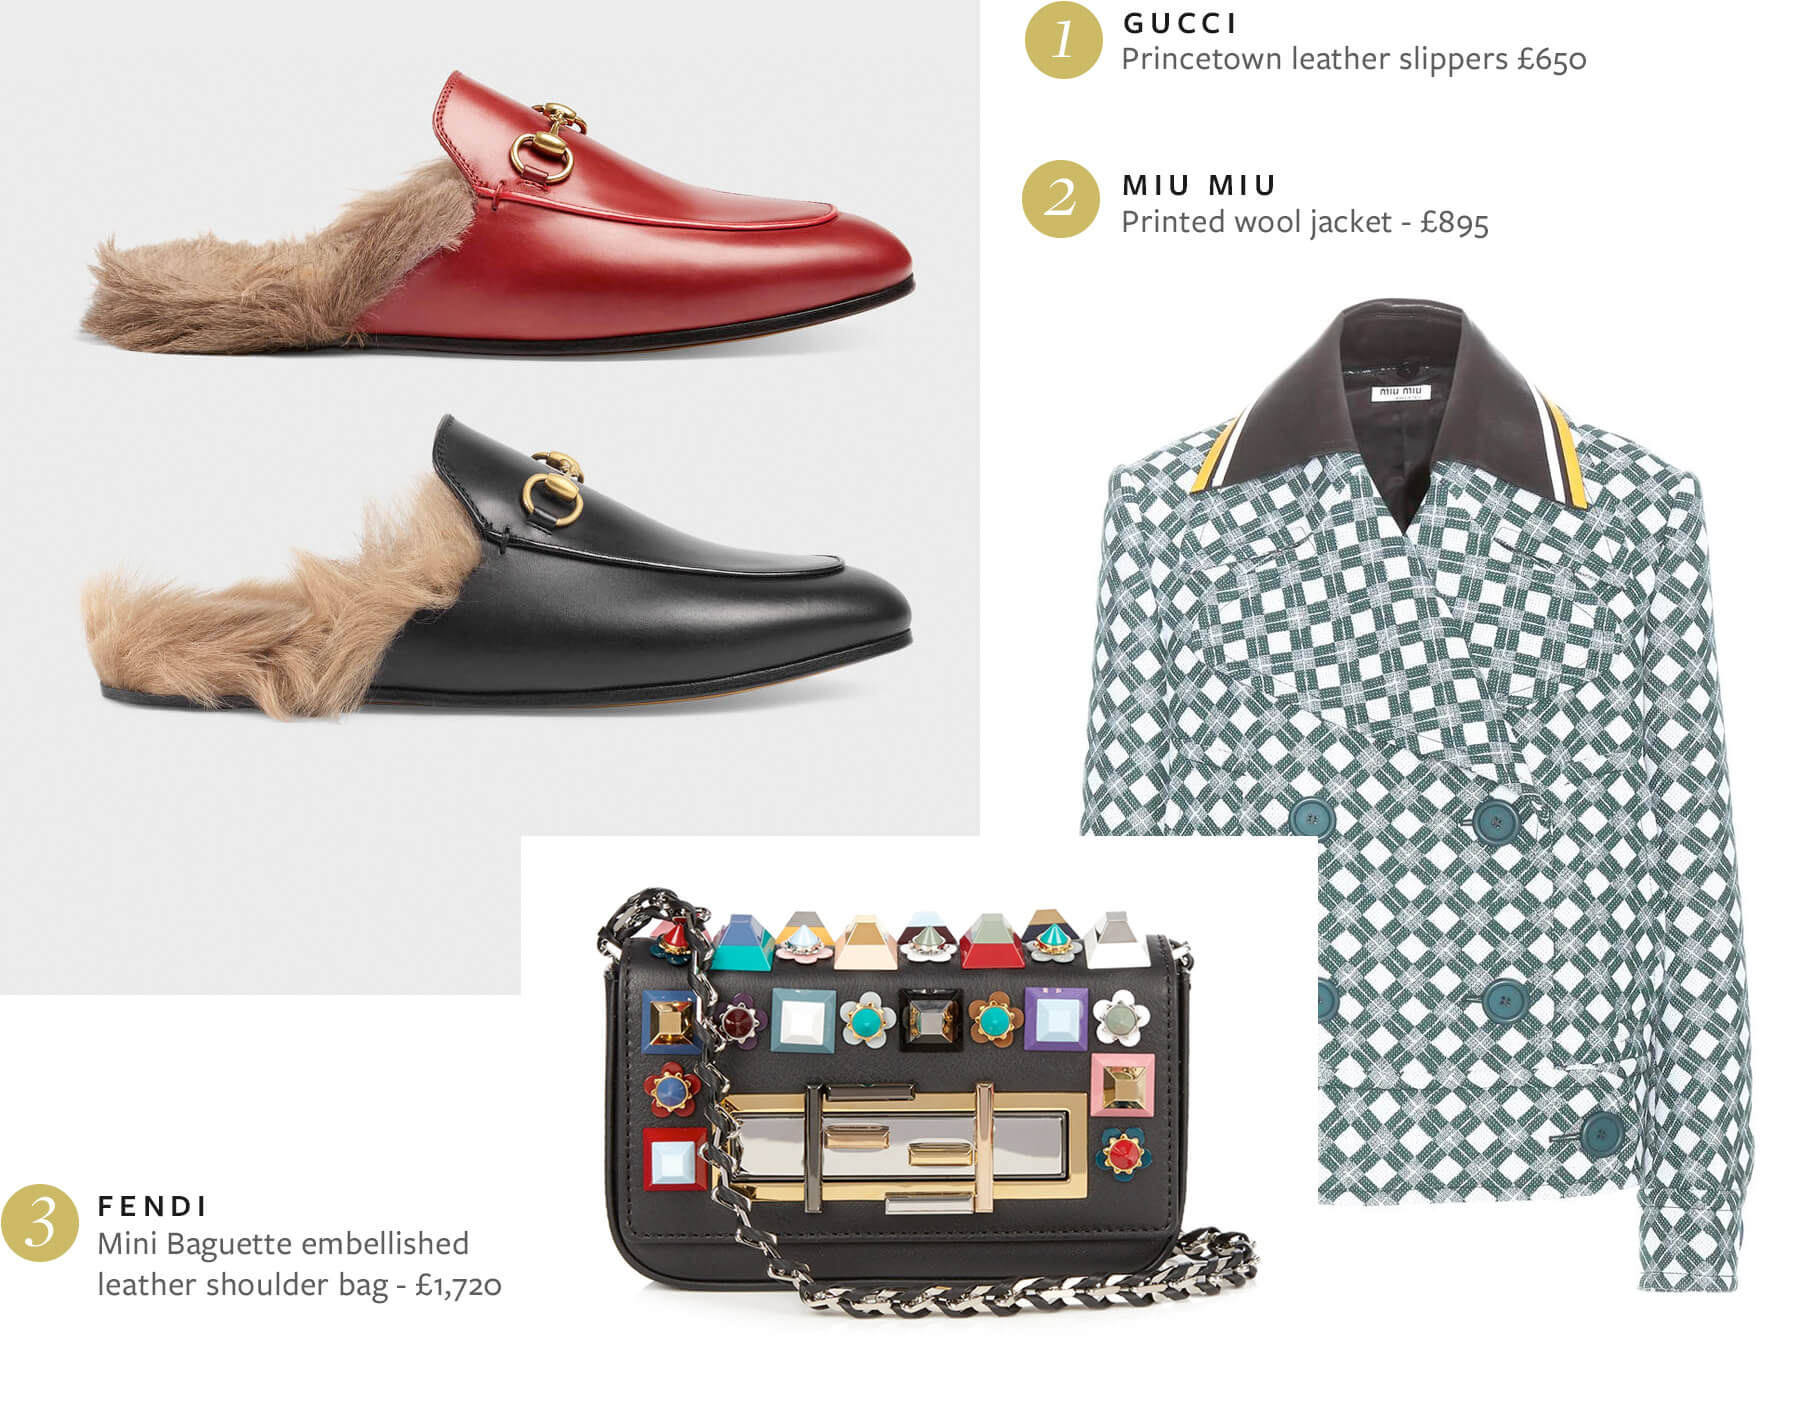 AW16 - What to look for - Gucci Slide ons, Fendi leather shoulder bag, Miu Miu Printed Wool jacket